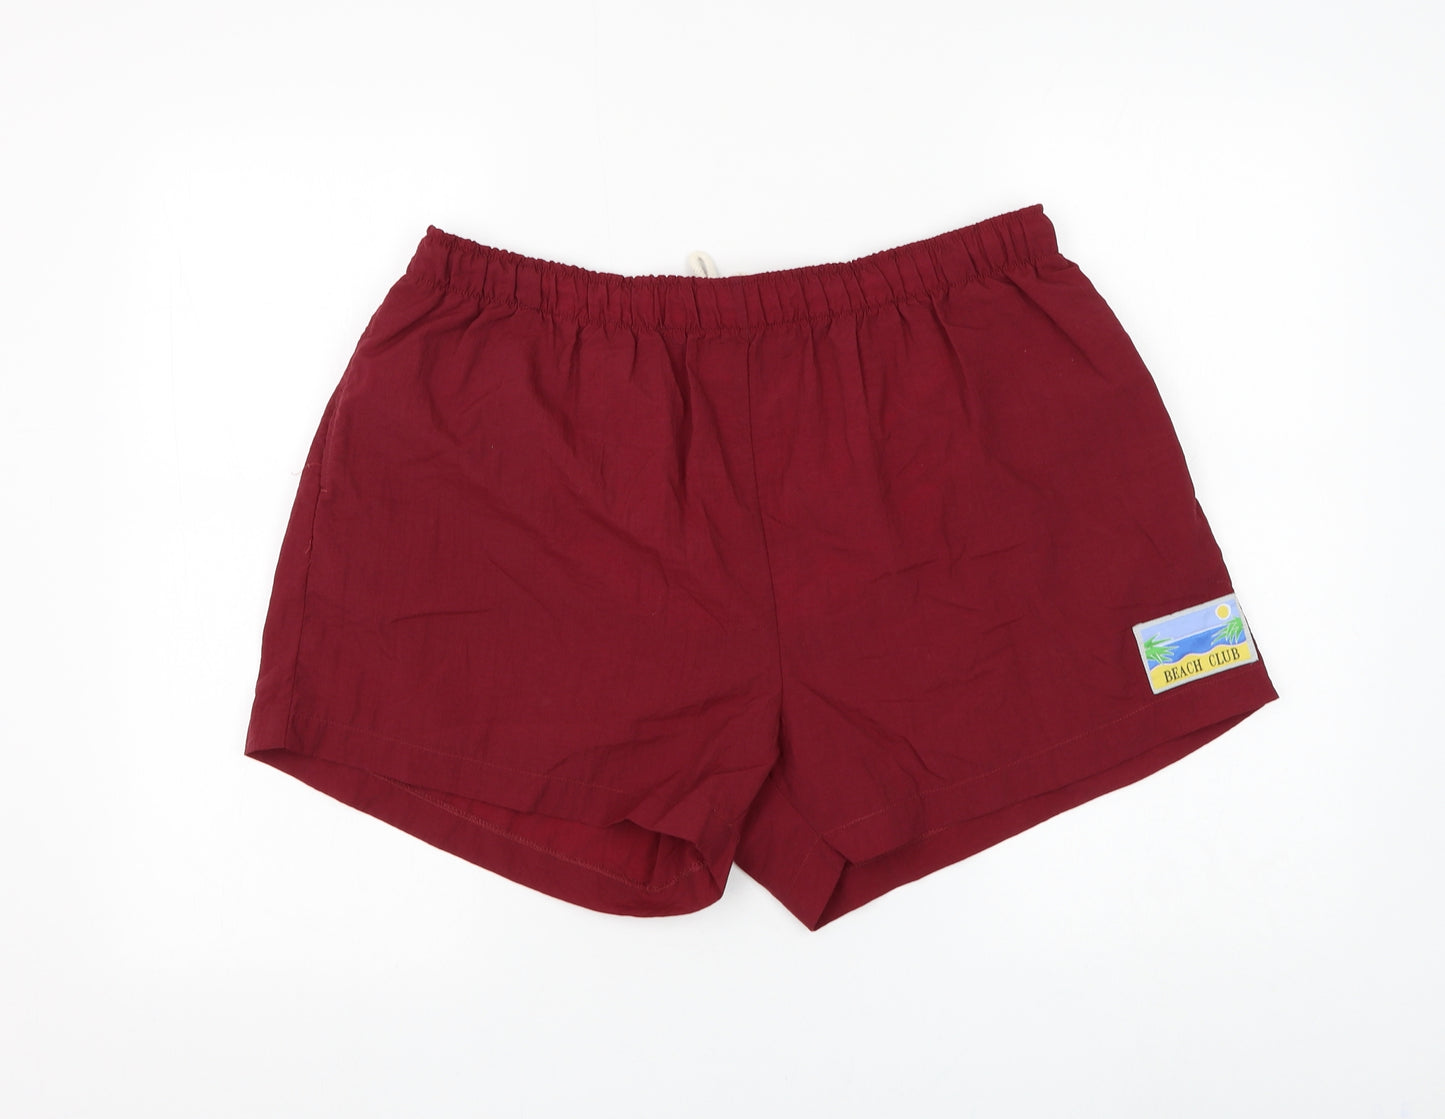 Beach Club Mens Red Nylon Sweat Shorts Size XL Regular Drawstring - Beach Club Swimwear